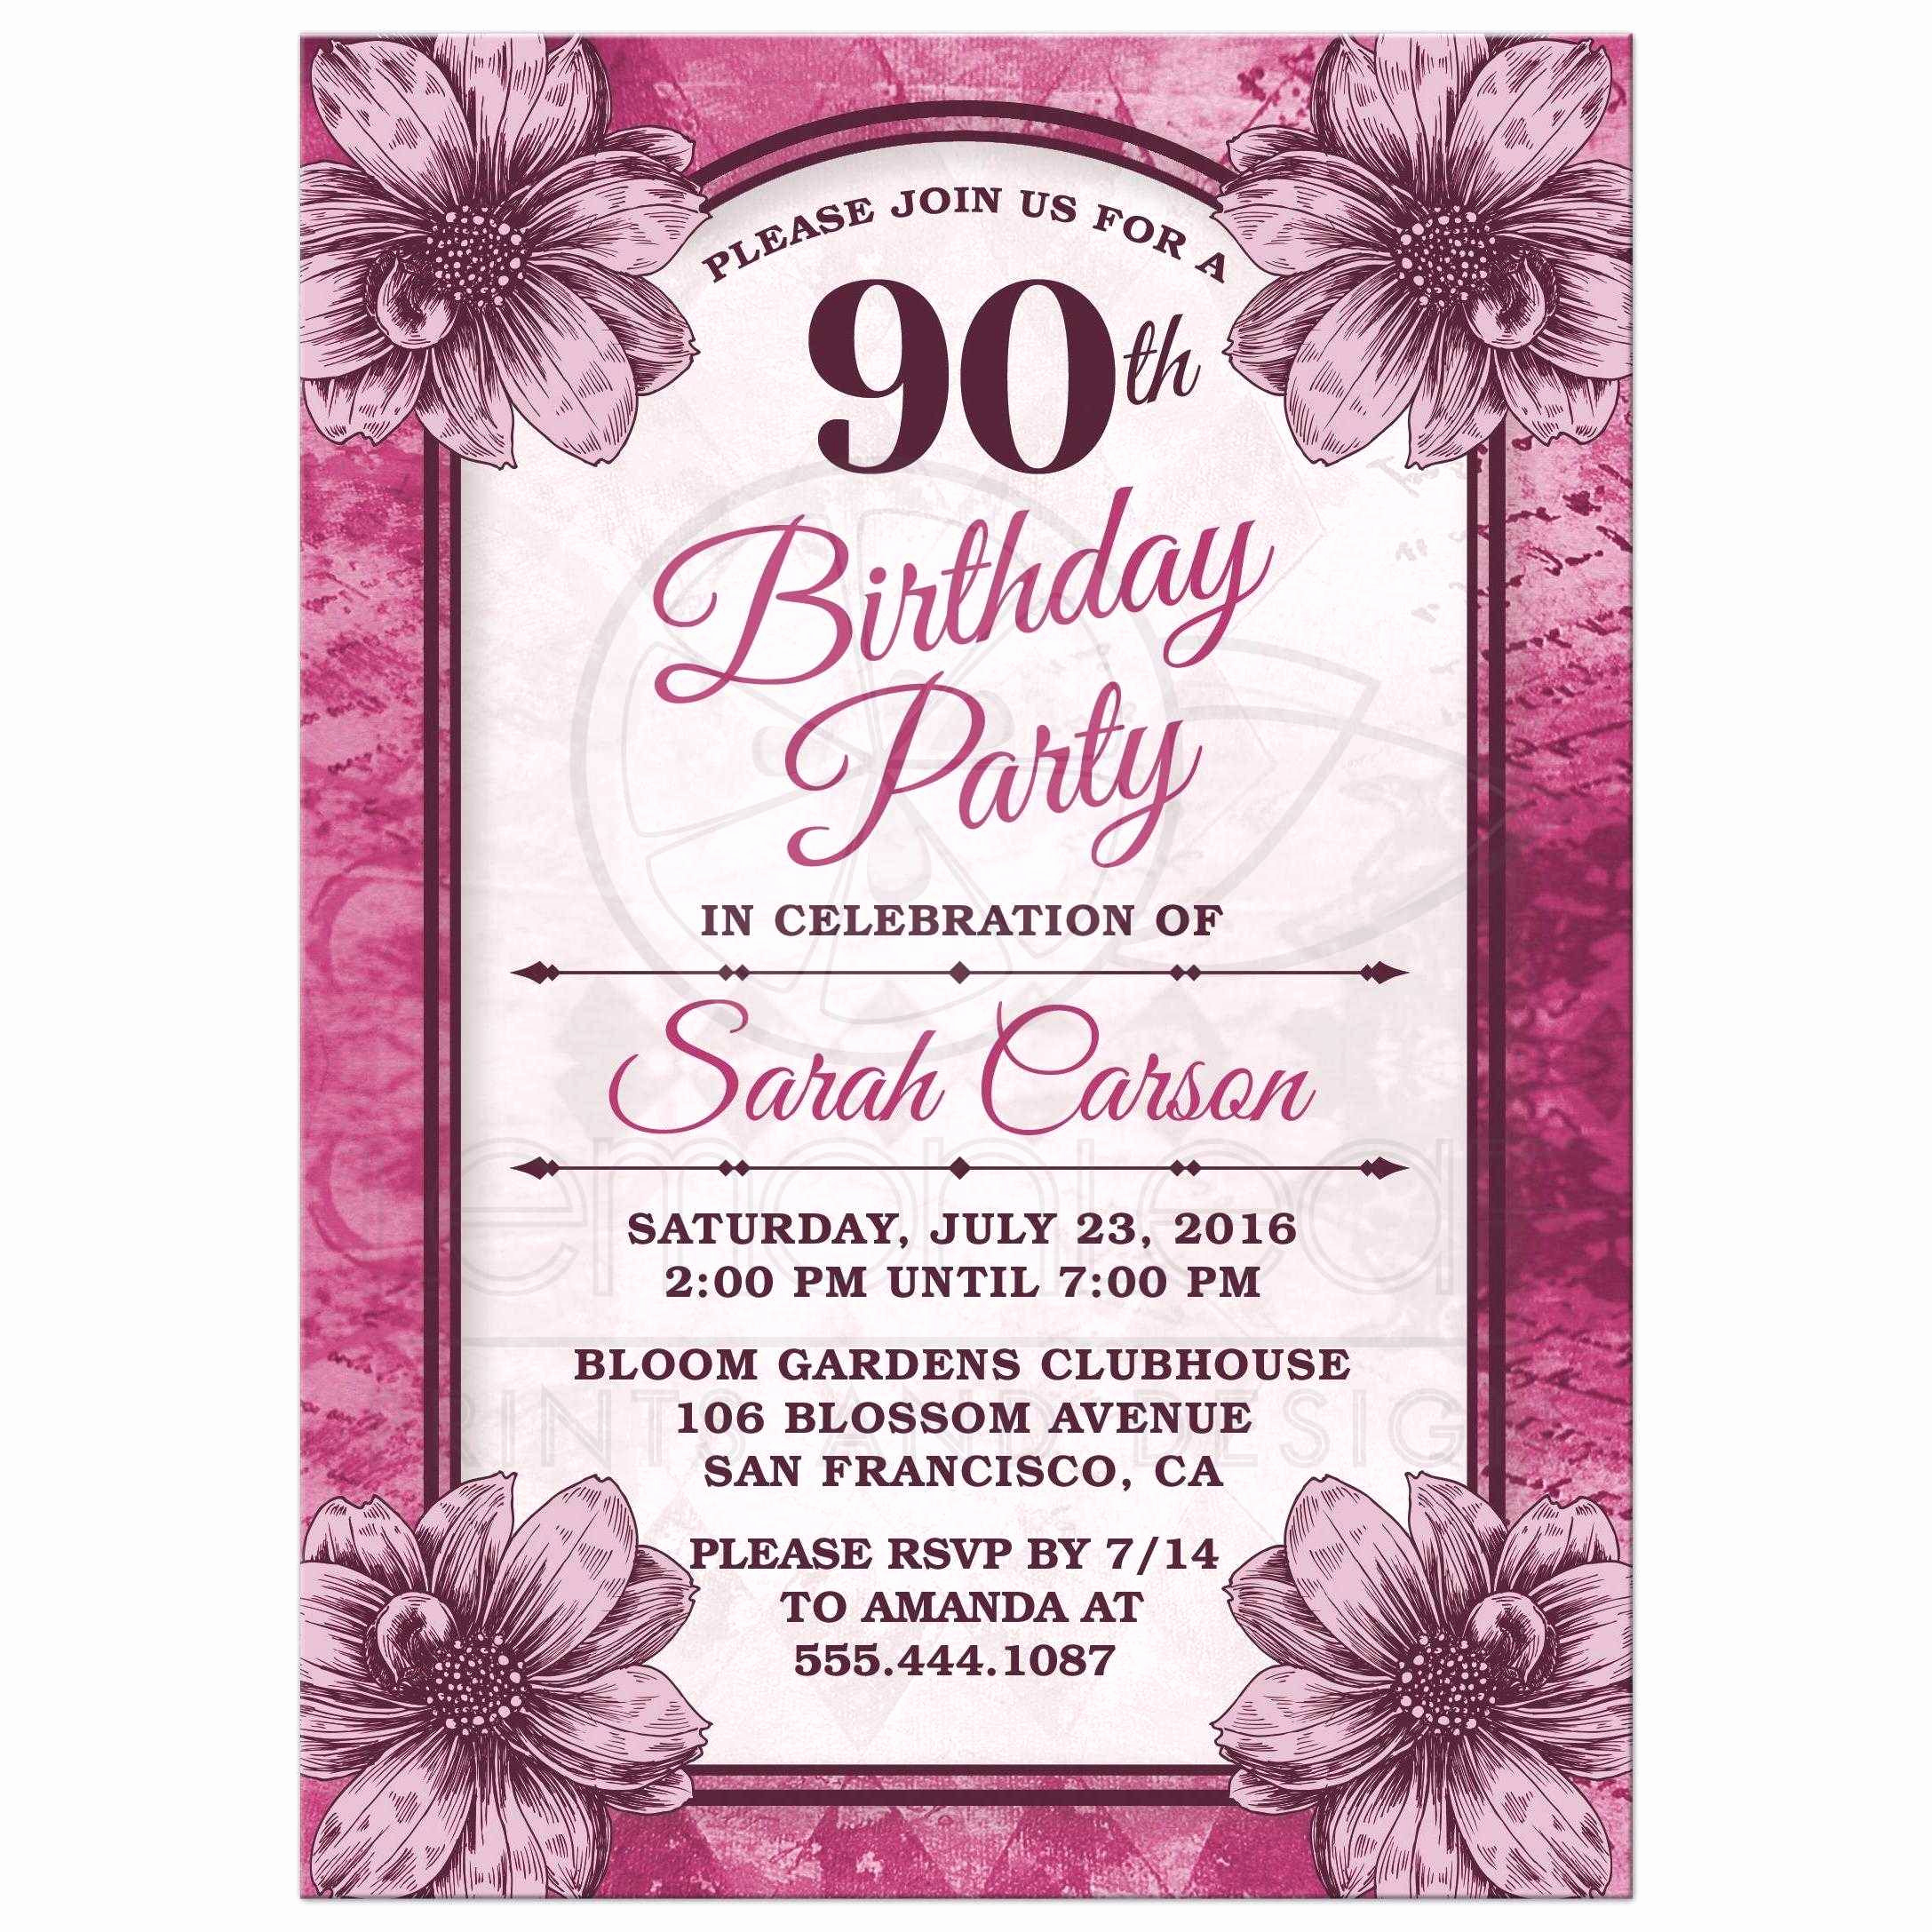 Birthday Invitation Card Sample Unique 90th Birthday Party Invitations Templates Free